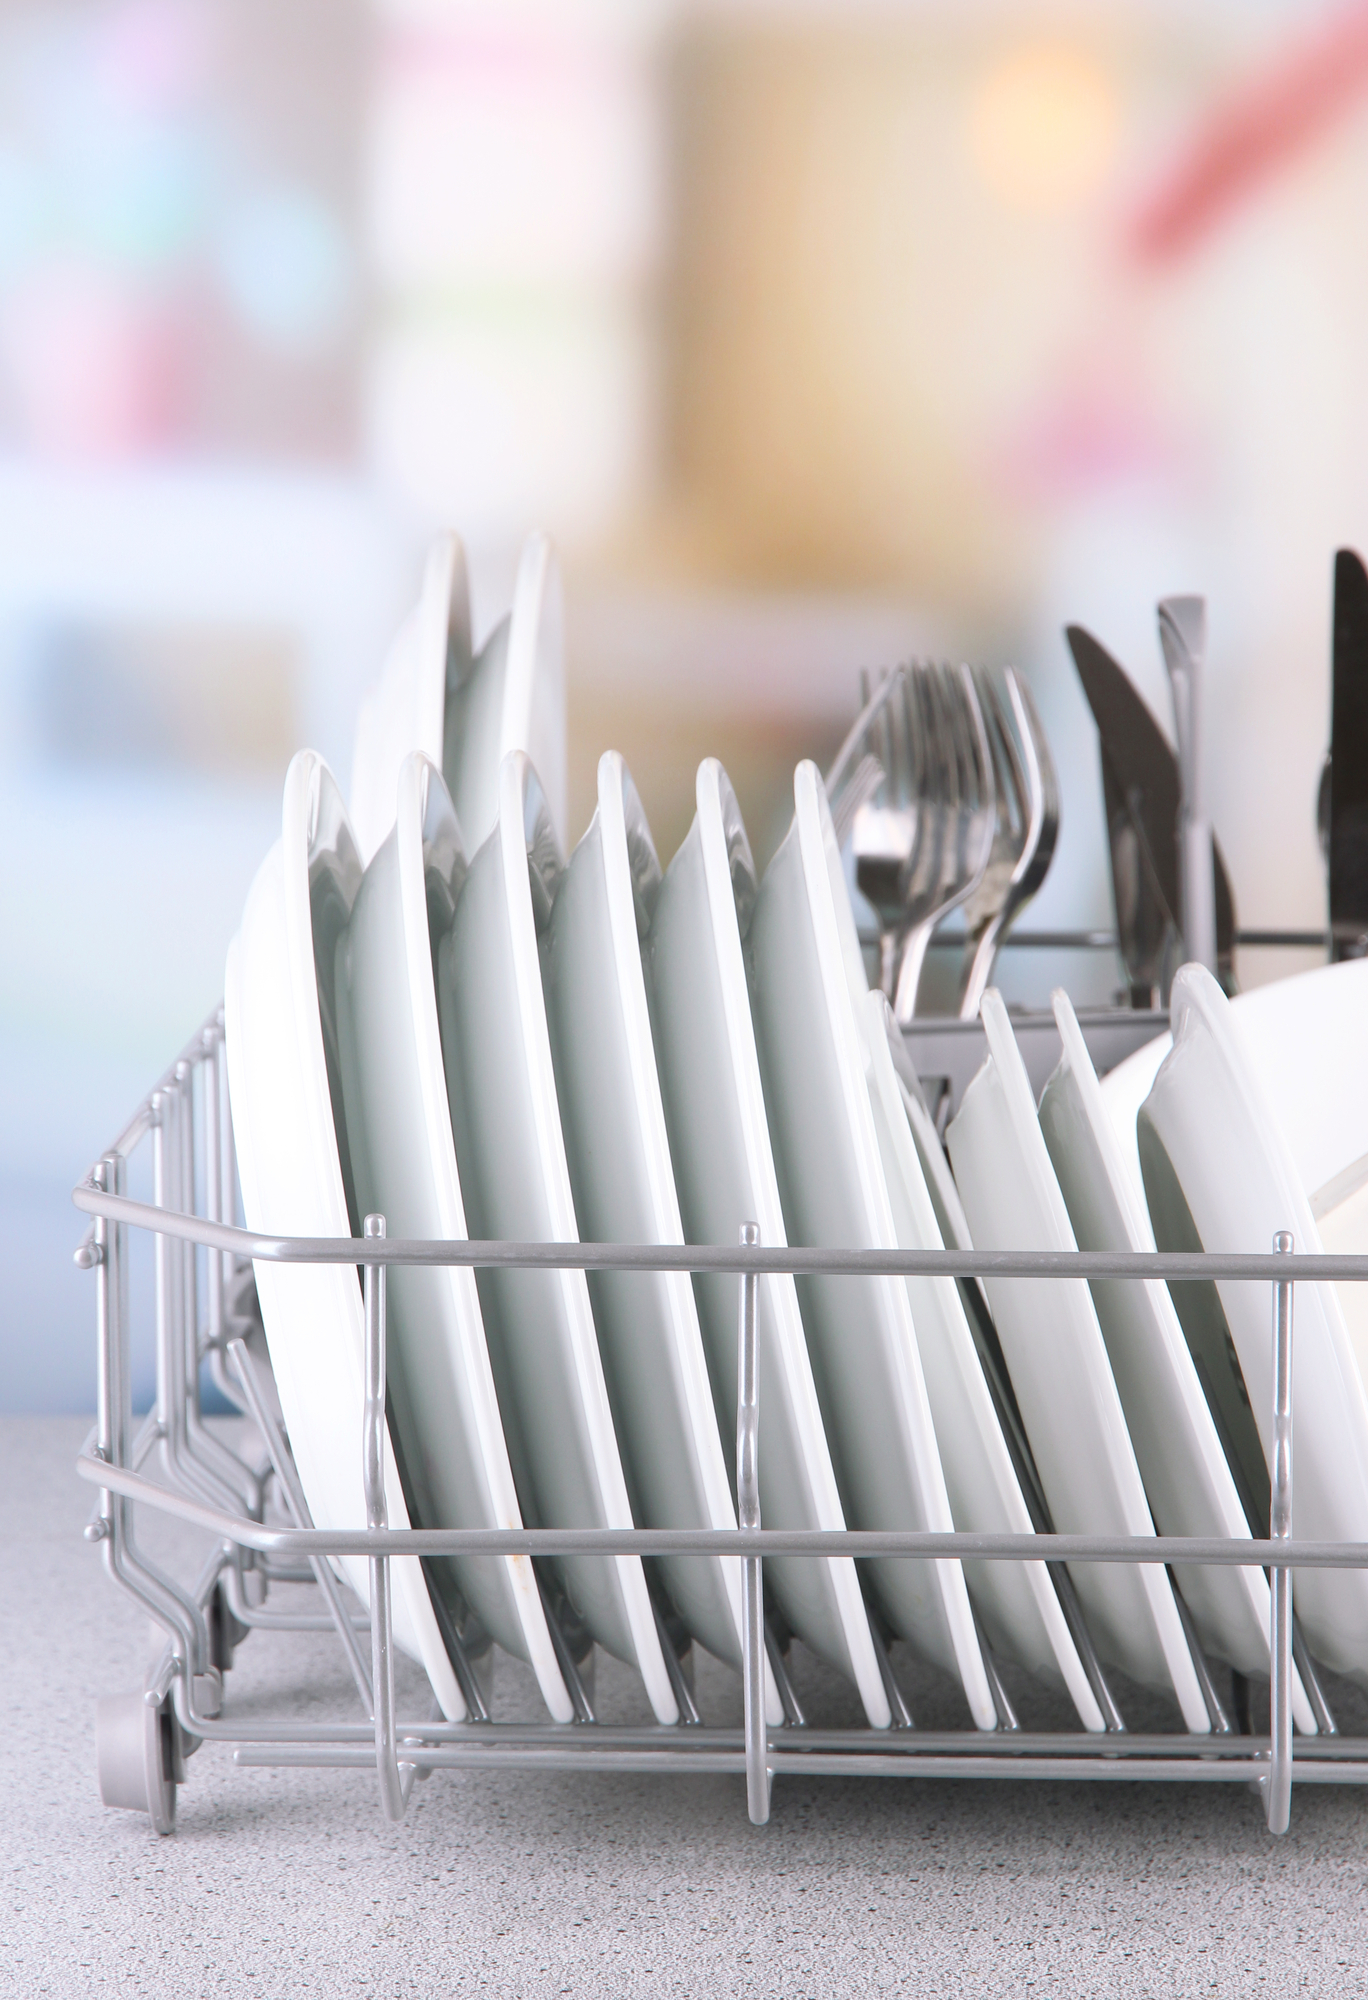 15 Best Non Toxic Dishwasher Soaps